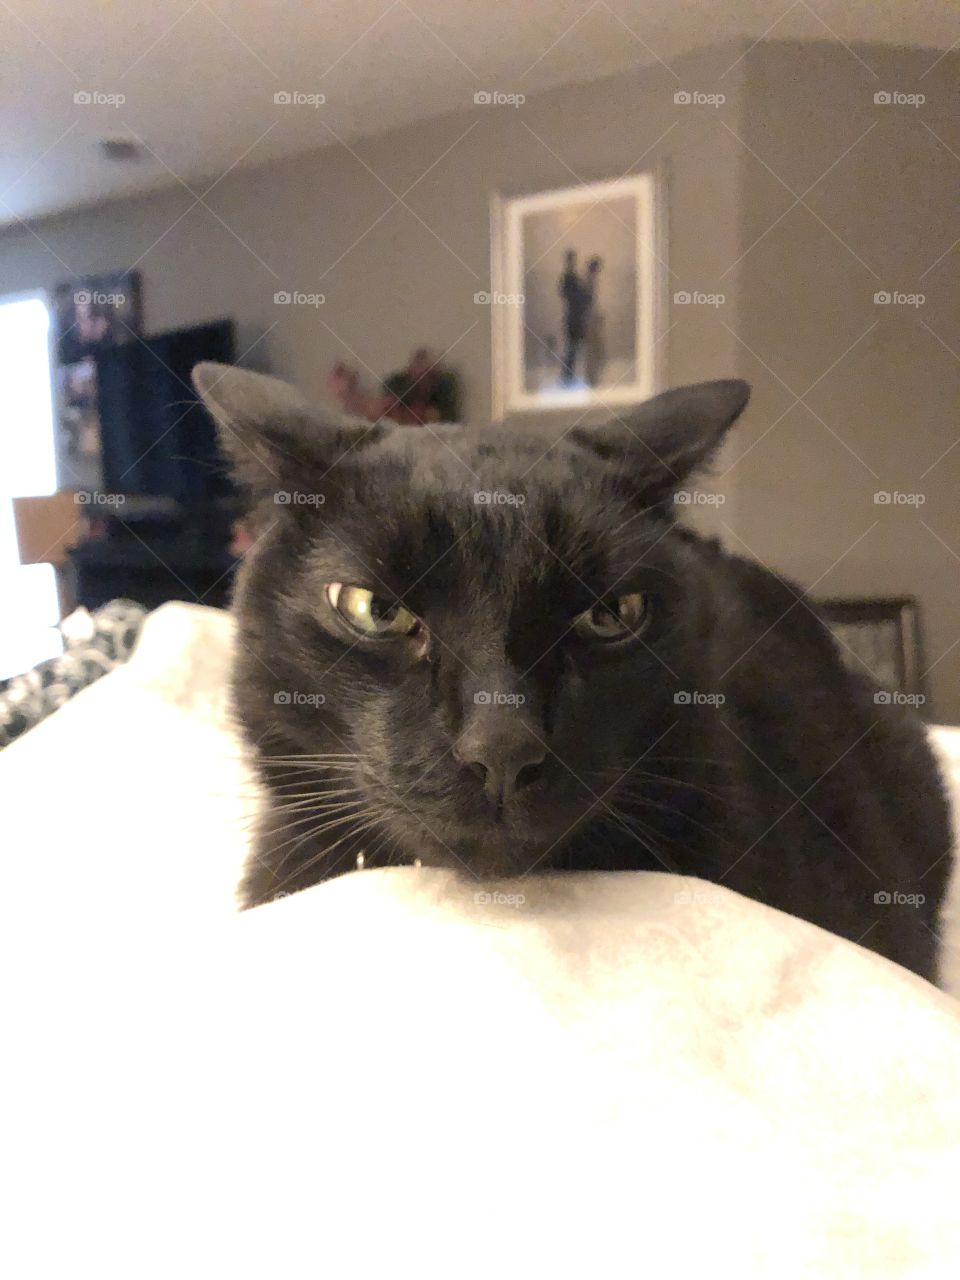 A very sleep black cat, ready for bedtime